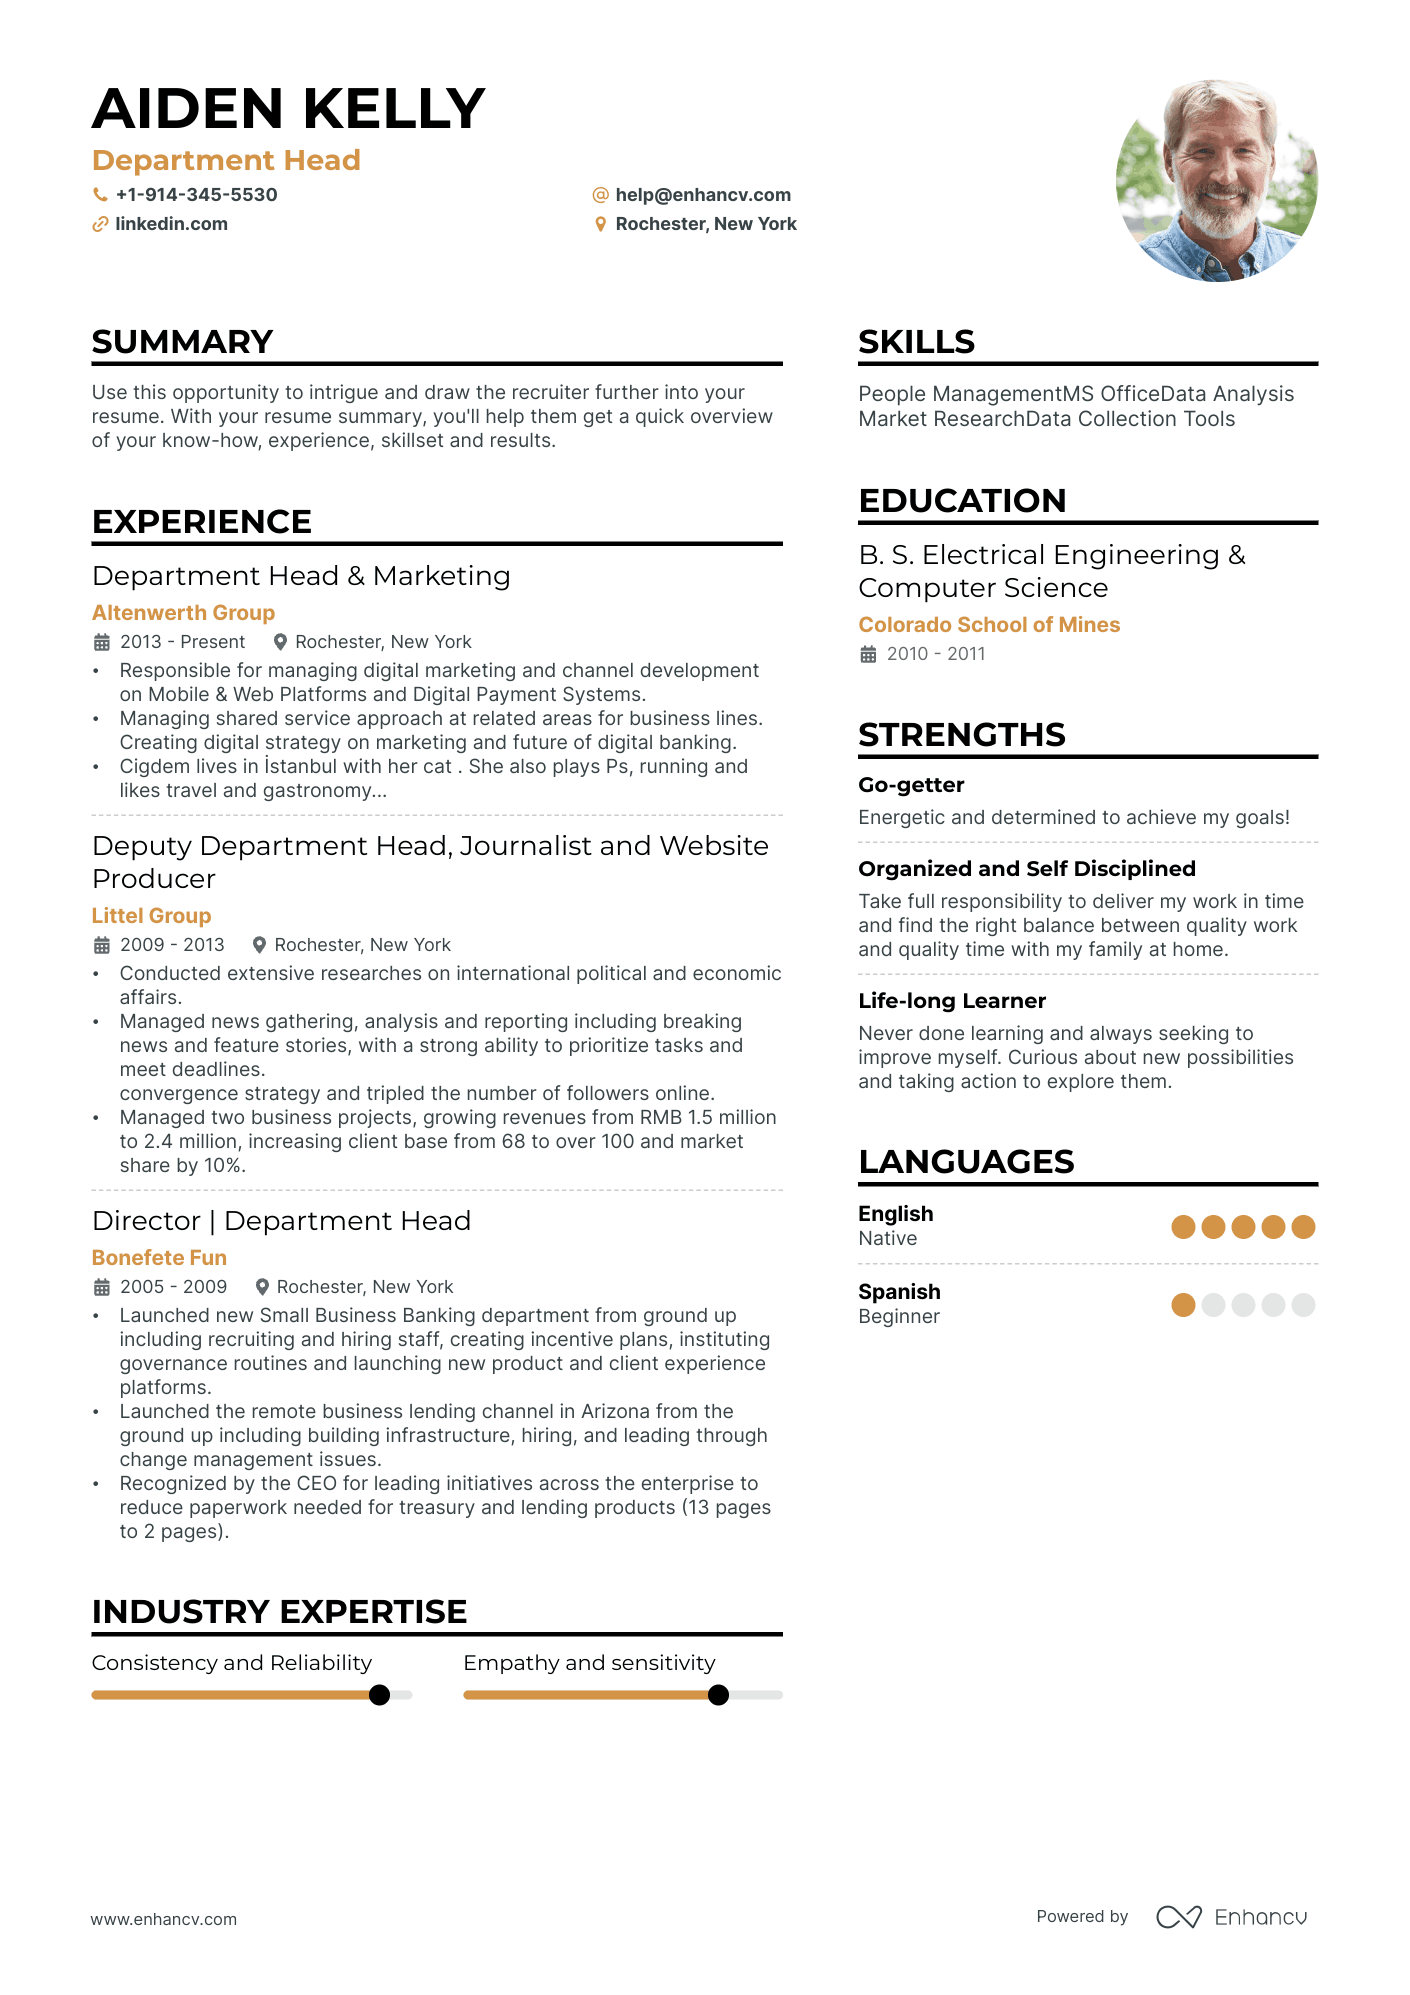 Department Head resume example